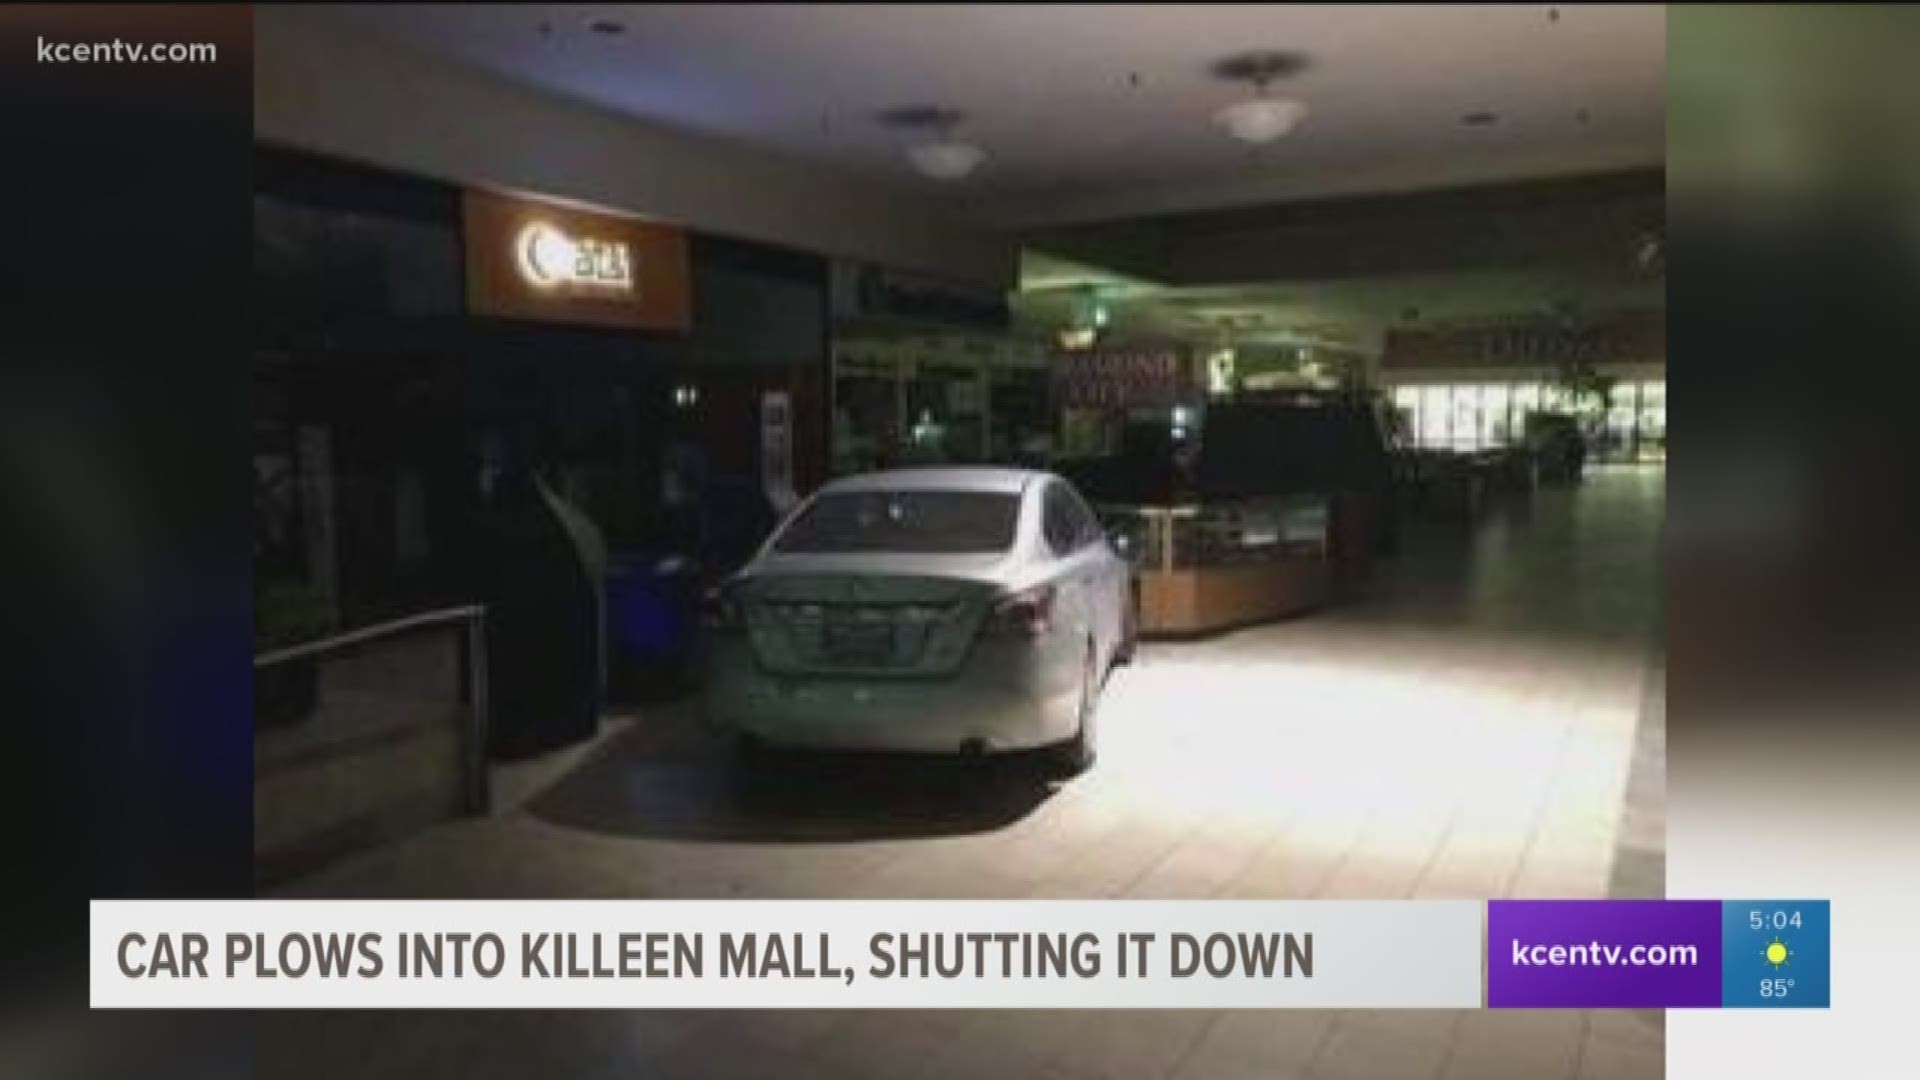 A car plows into the Killeen mall cashing through the doors. 